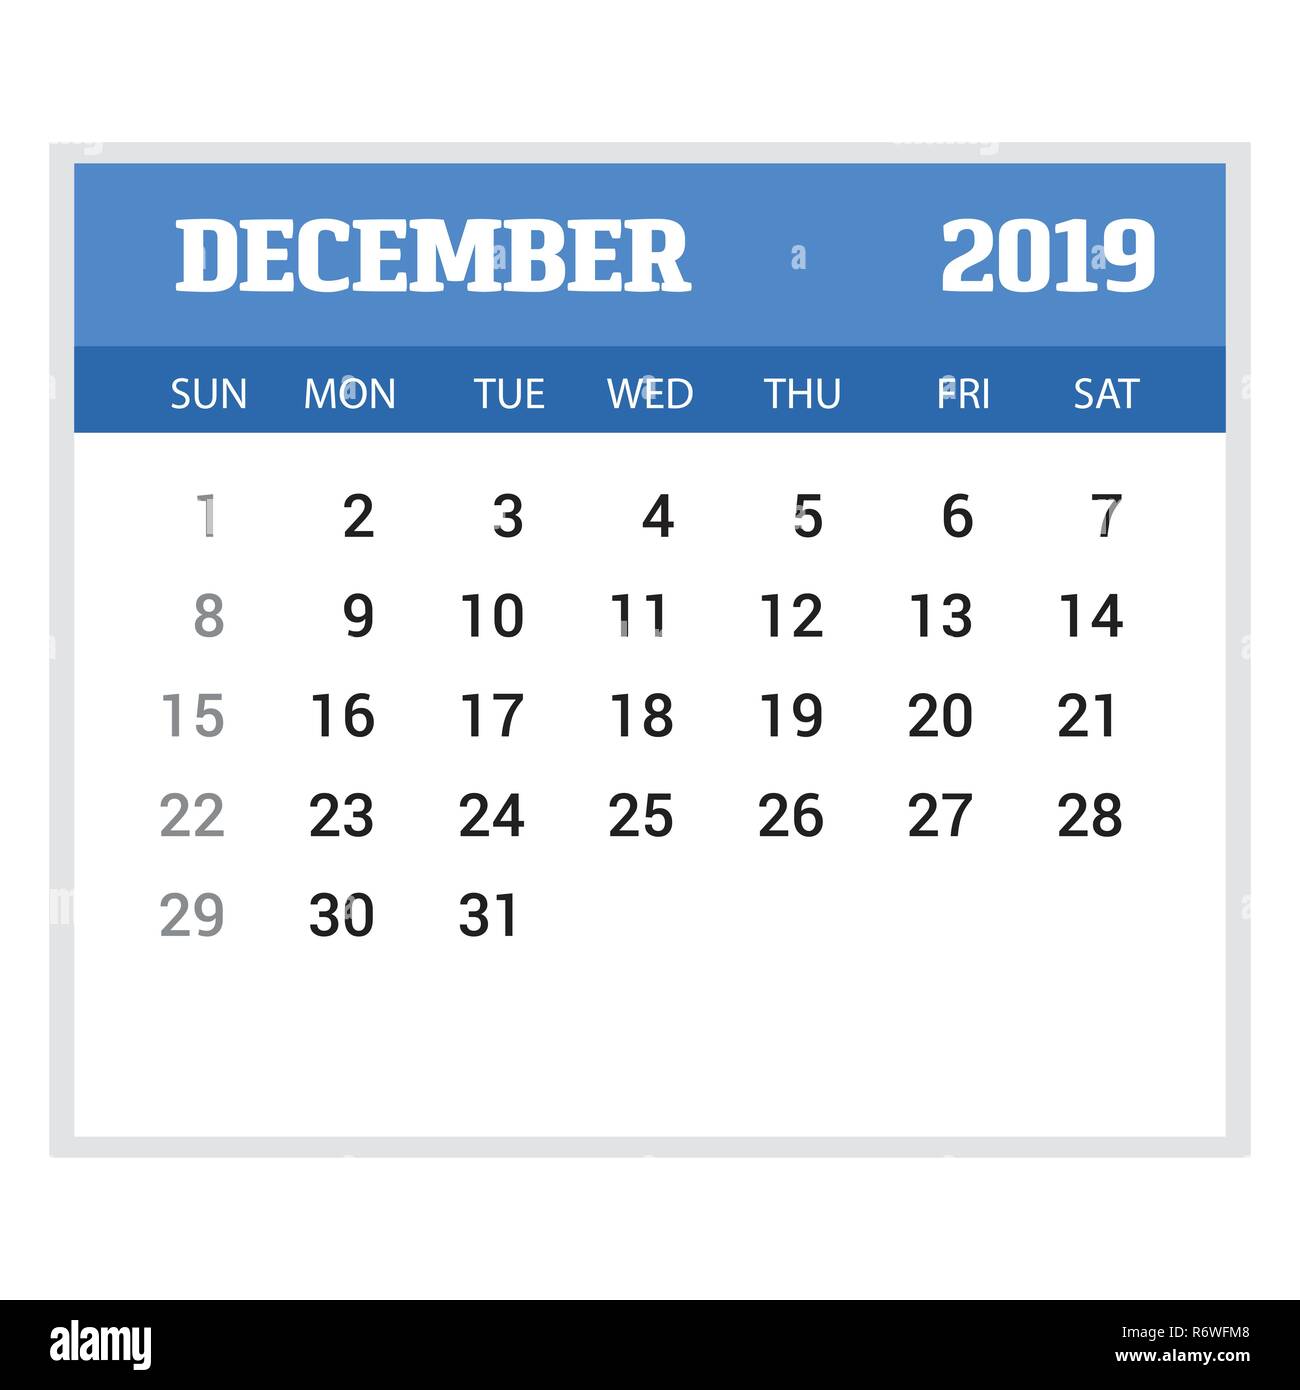 December Calendar Template from c8.alamy.com